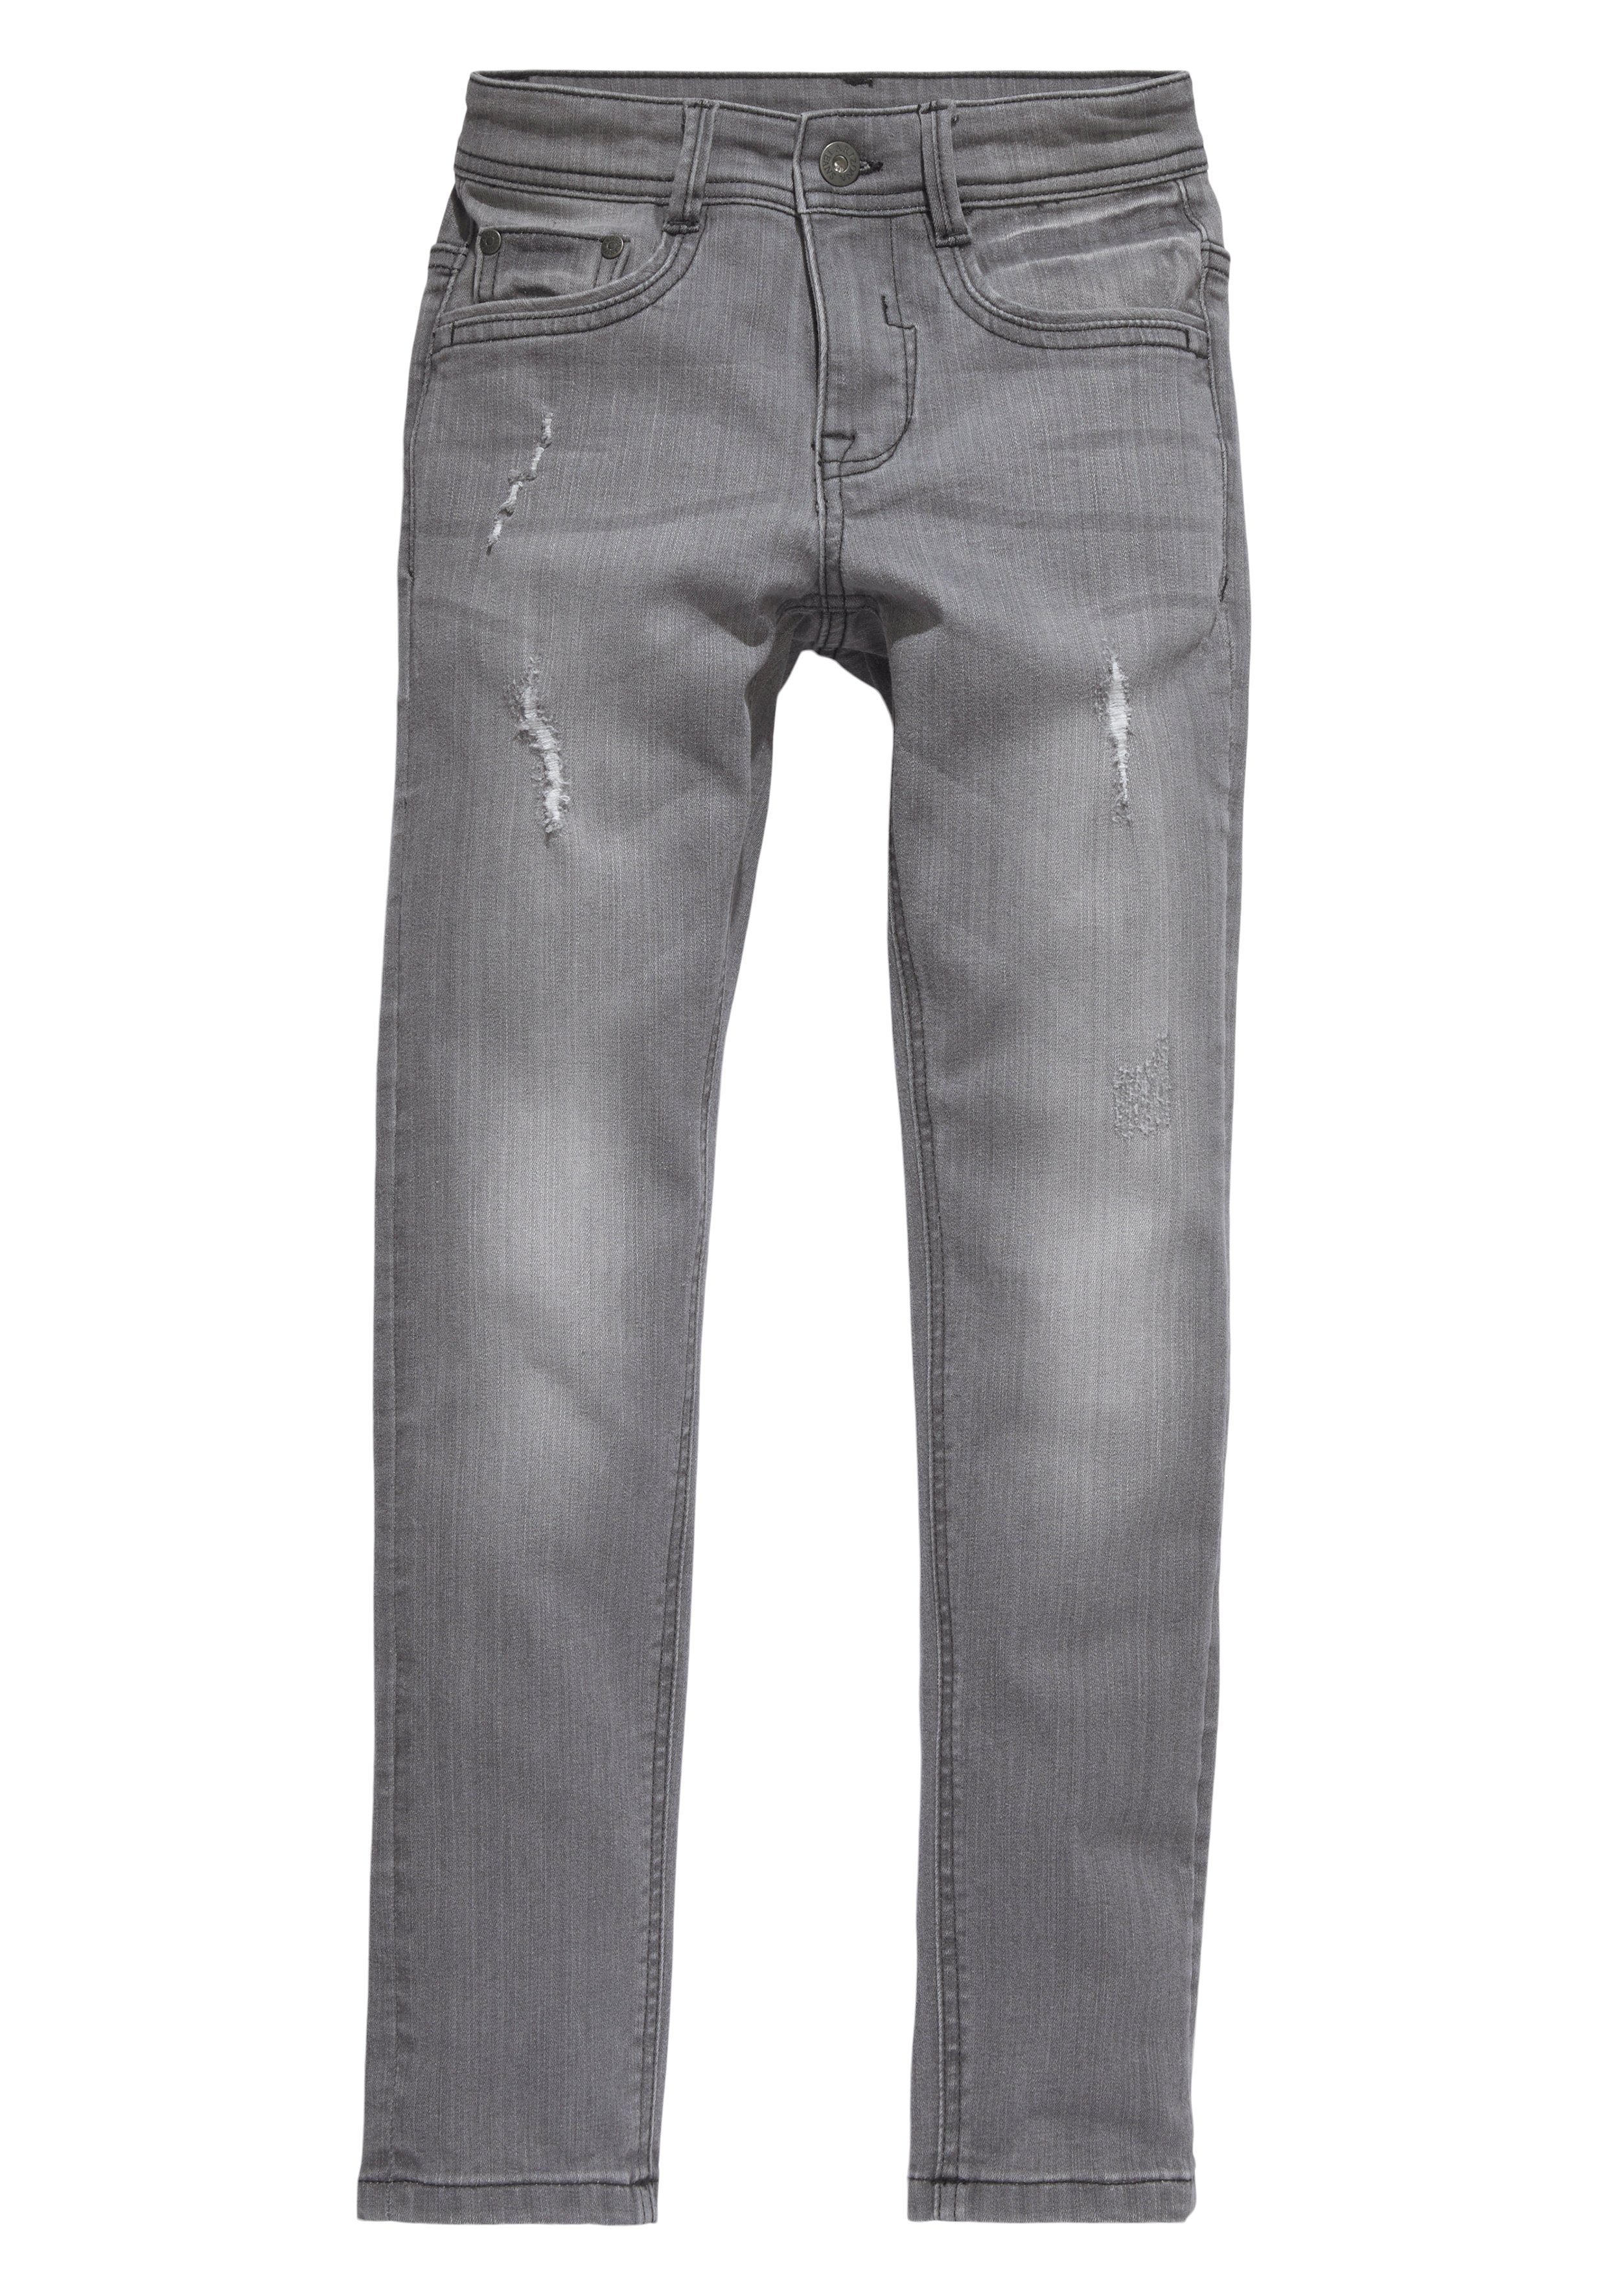 Arizona Stretch-Jeans toller mit Form schmale Waschung